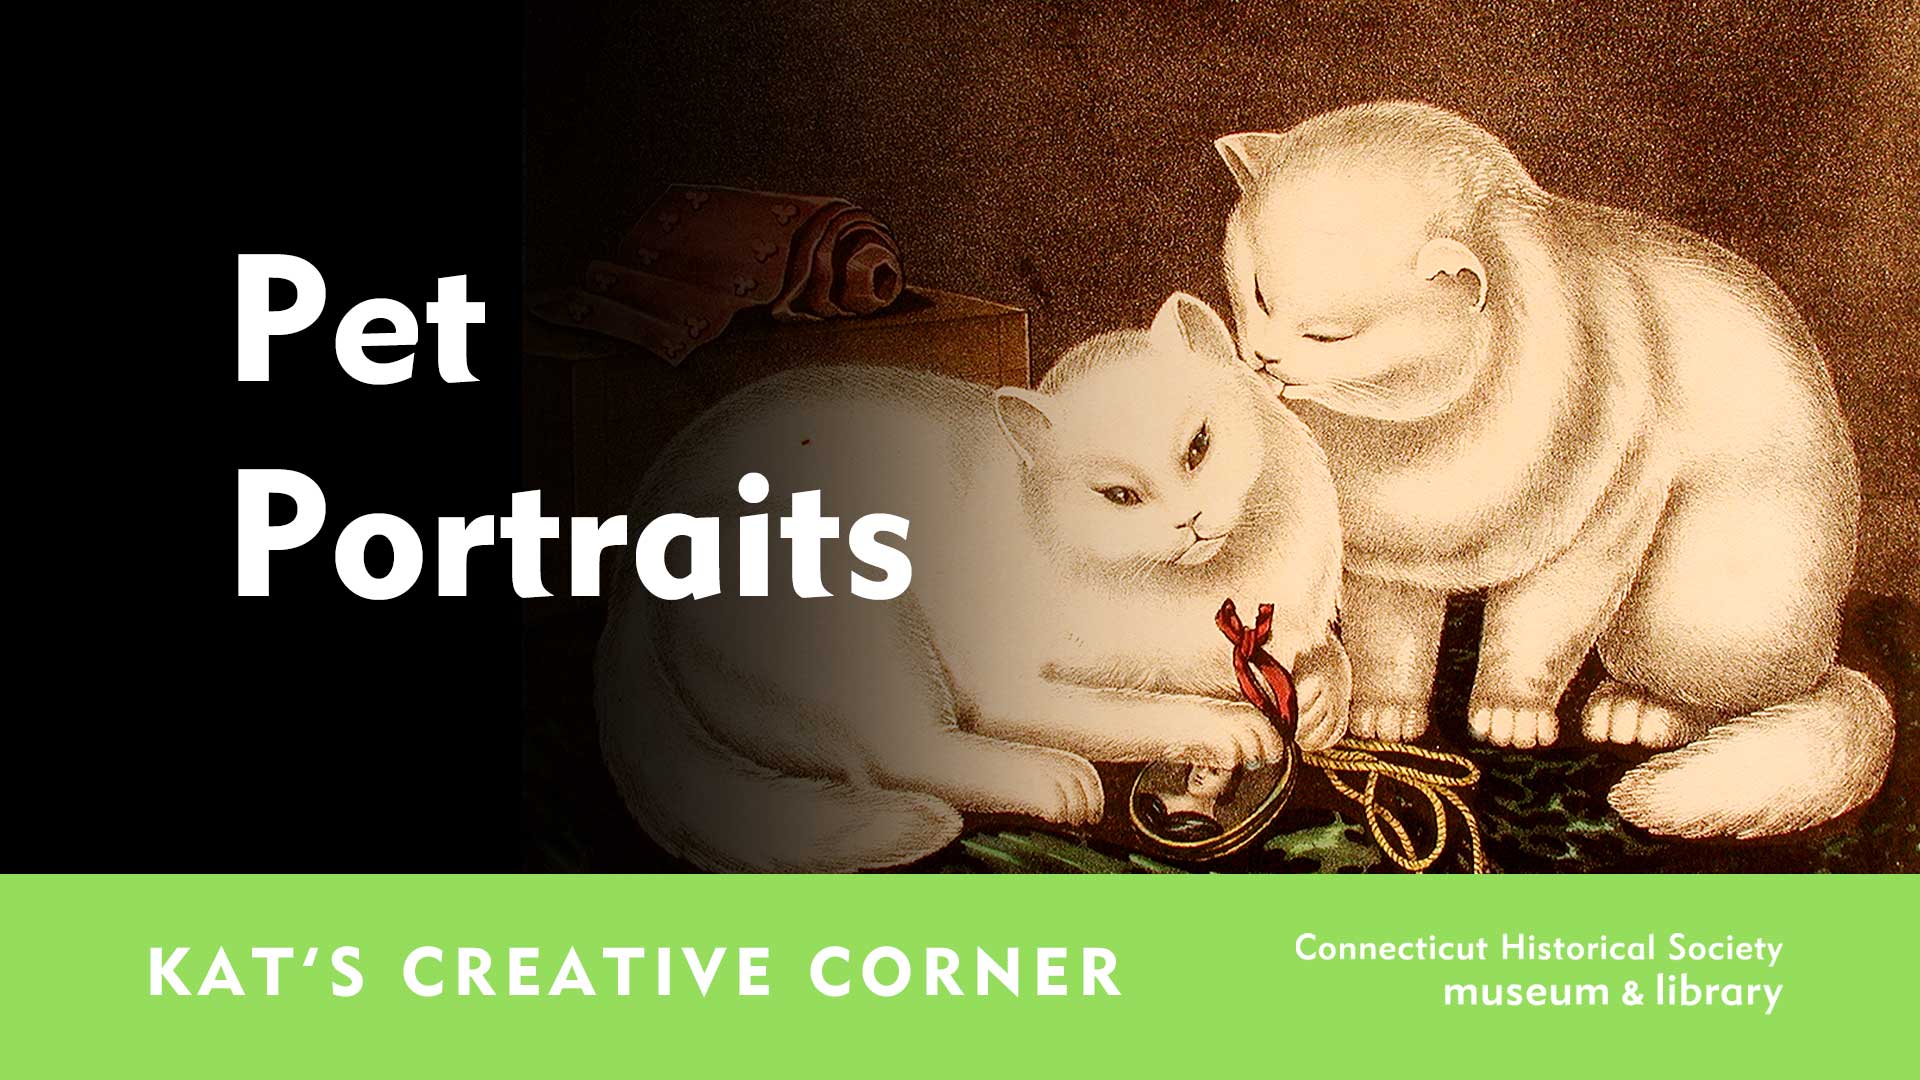 Kat’s Creative Corner: Pet Portraits